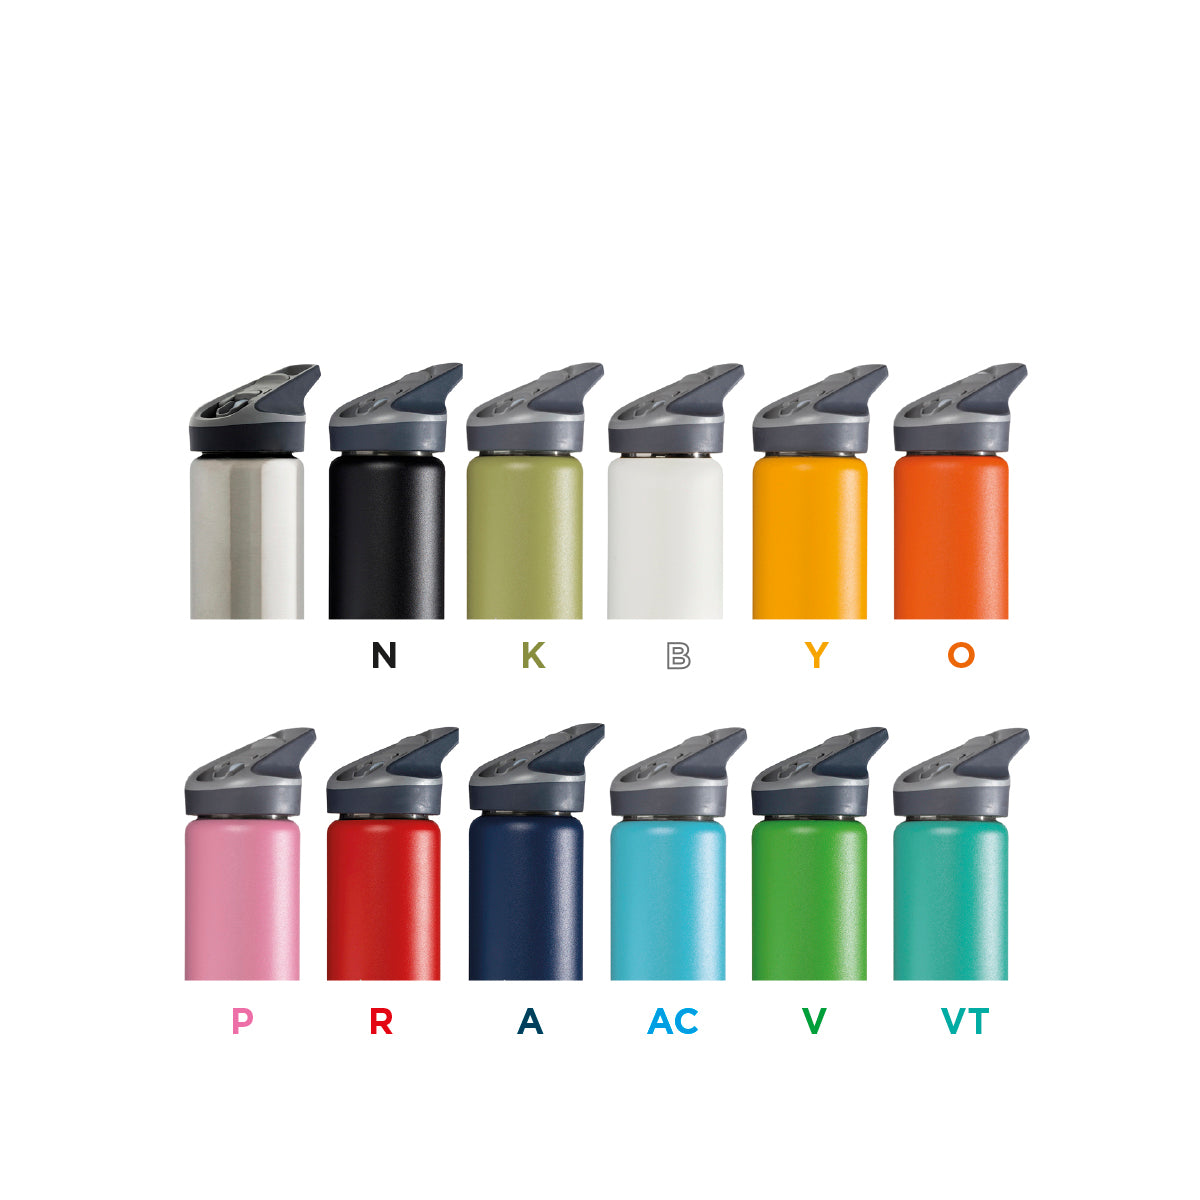 Laken RVS drinkfles Thermic Jannu - Diverse kleuren